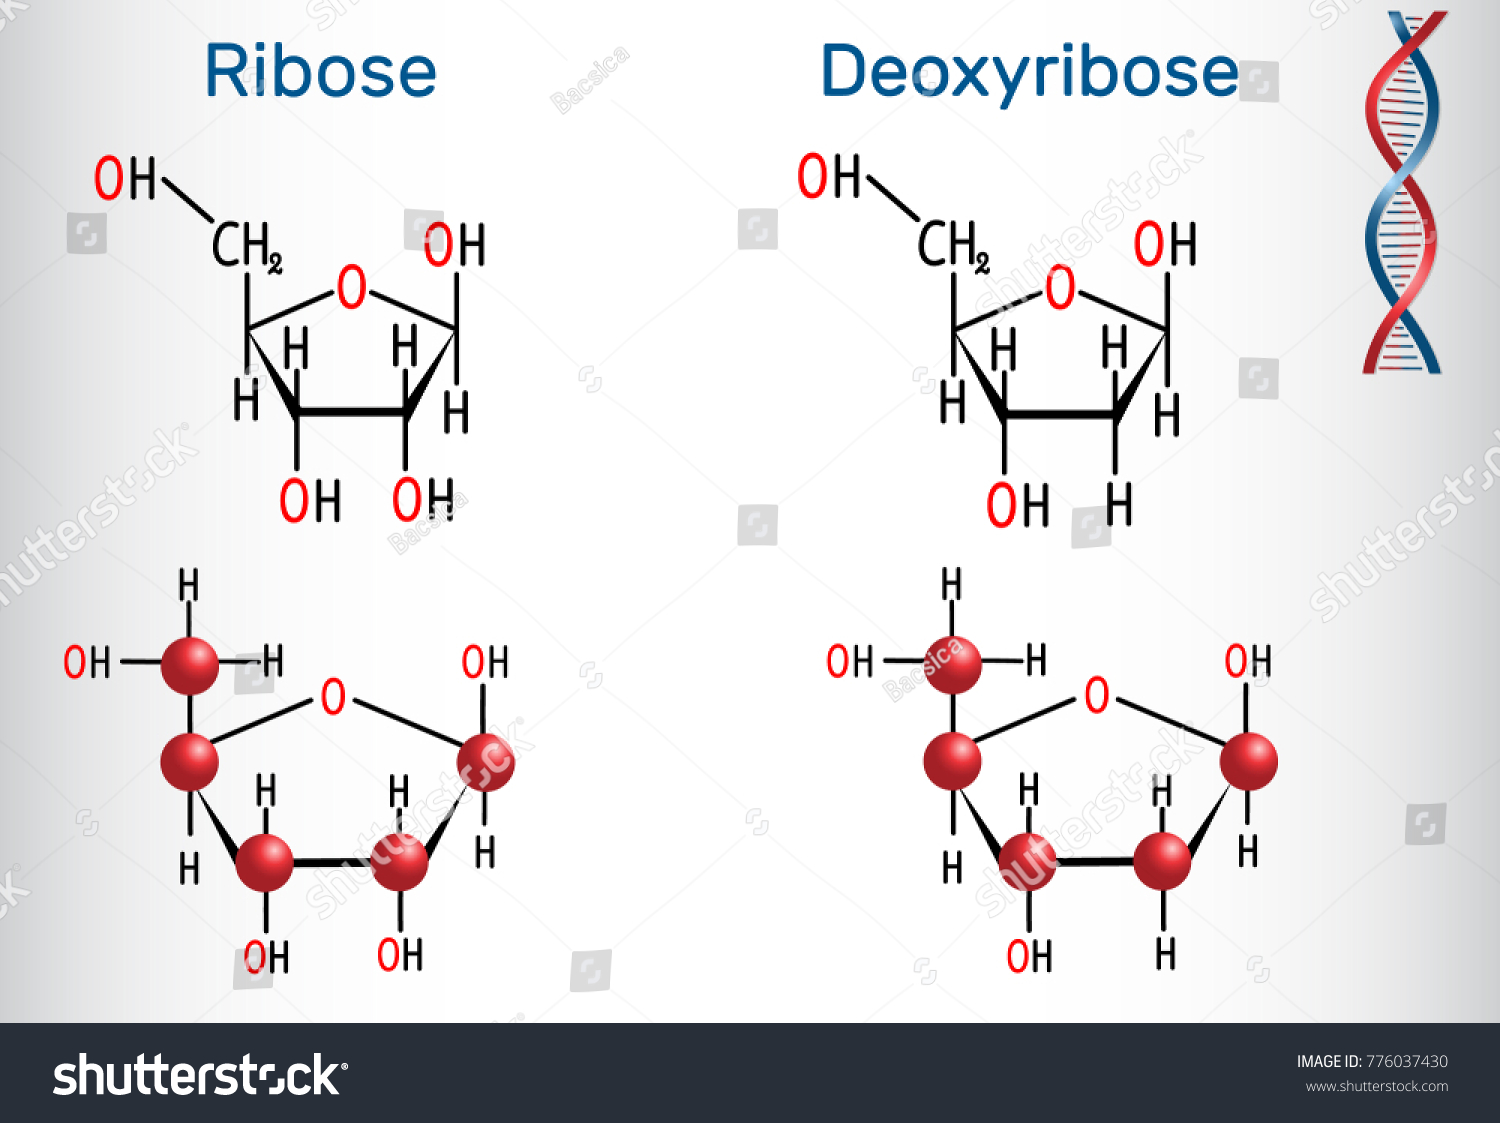 Рибоза структурная. 2 Дезоксирибоза. Рибоза и дезоксирибоза формулы. Рибоза строение молекулы. Дезоксирибоза структурная формула.